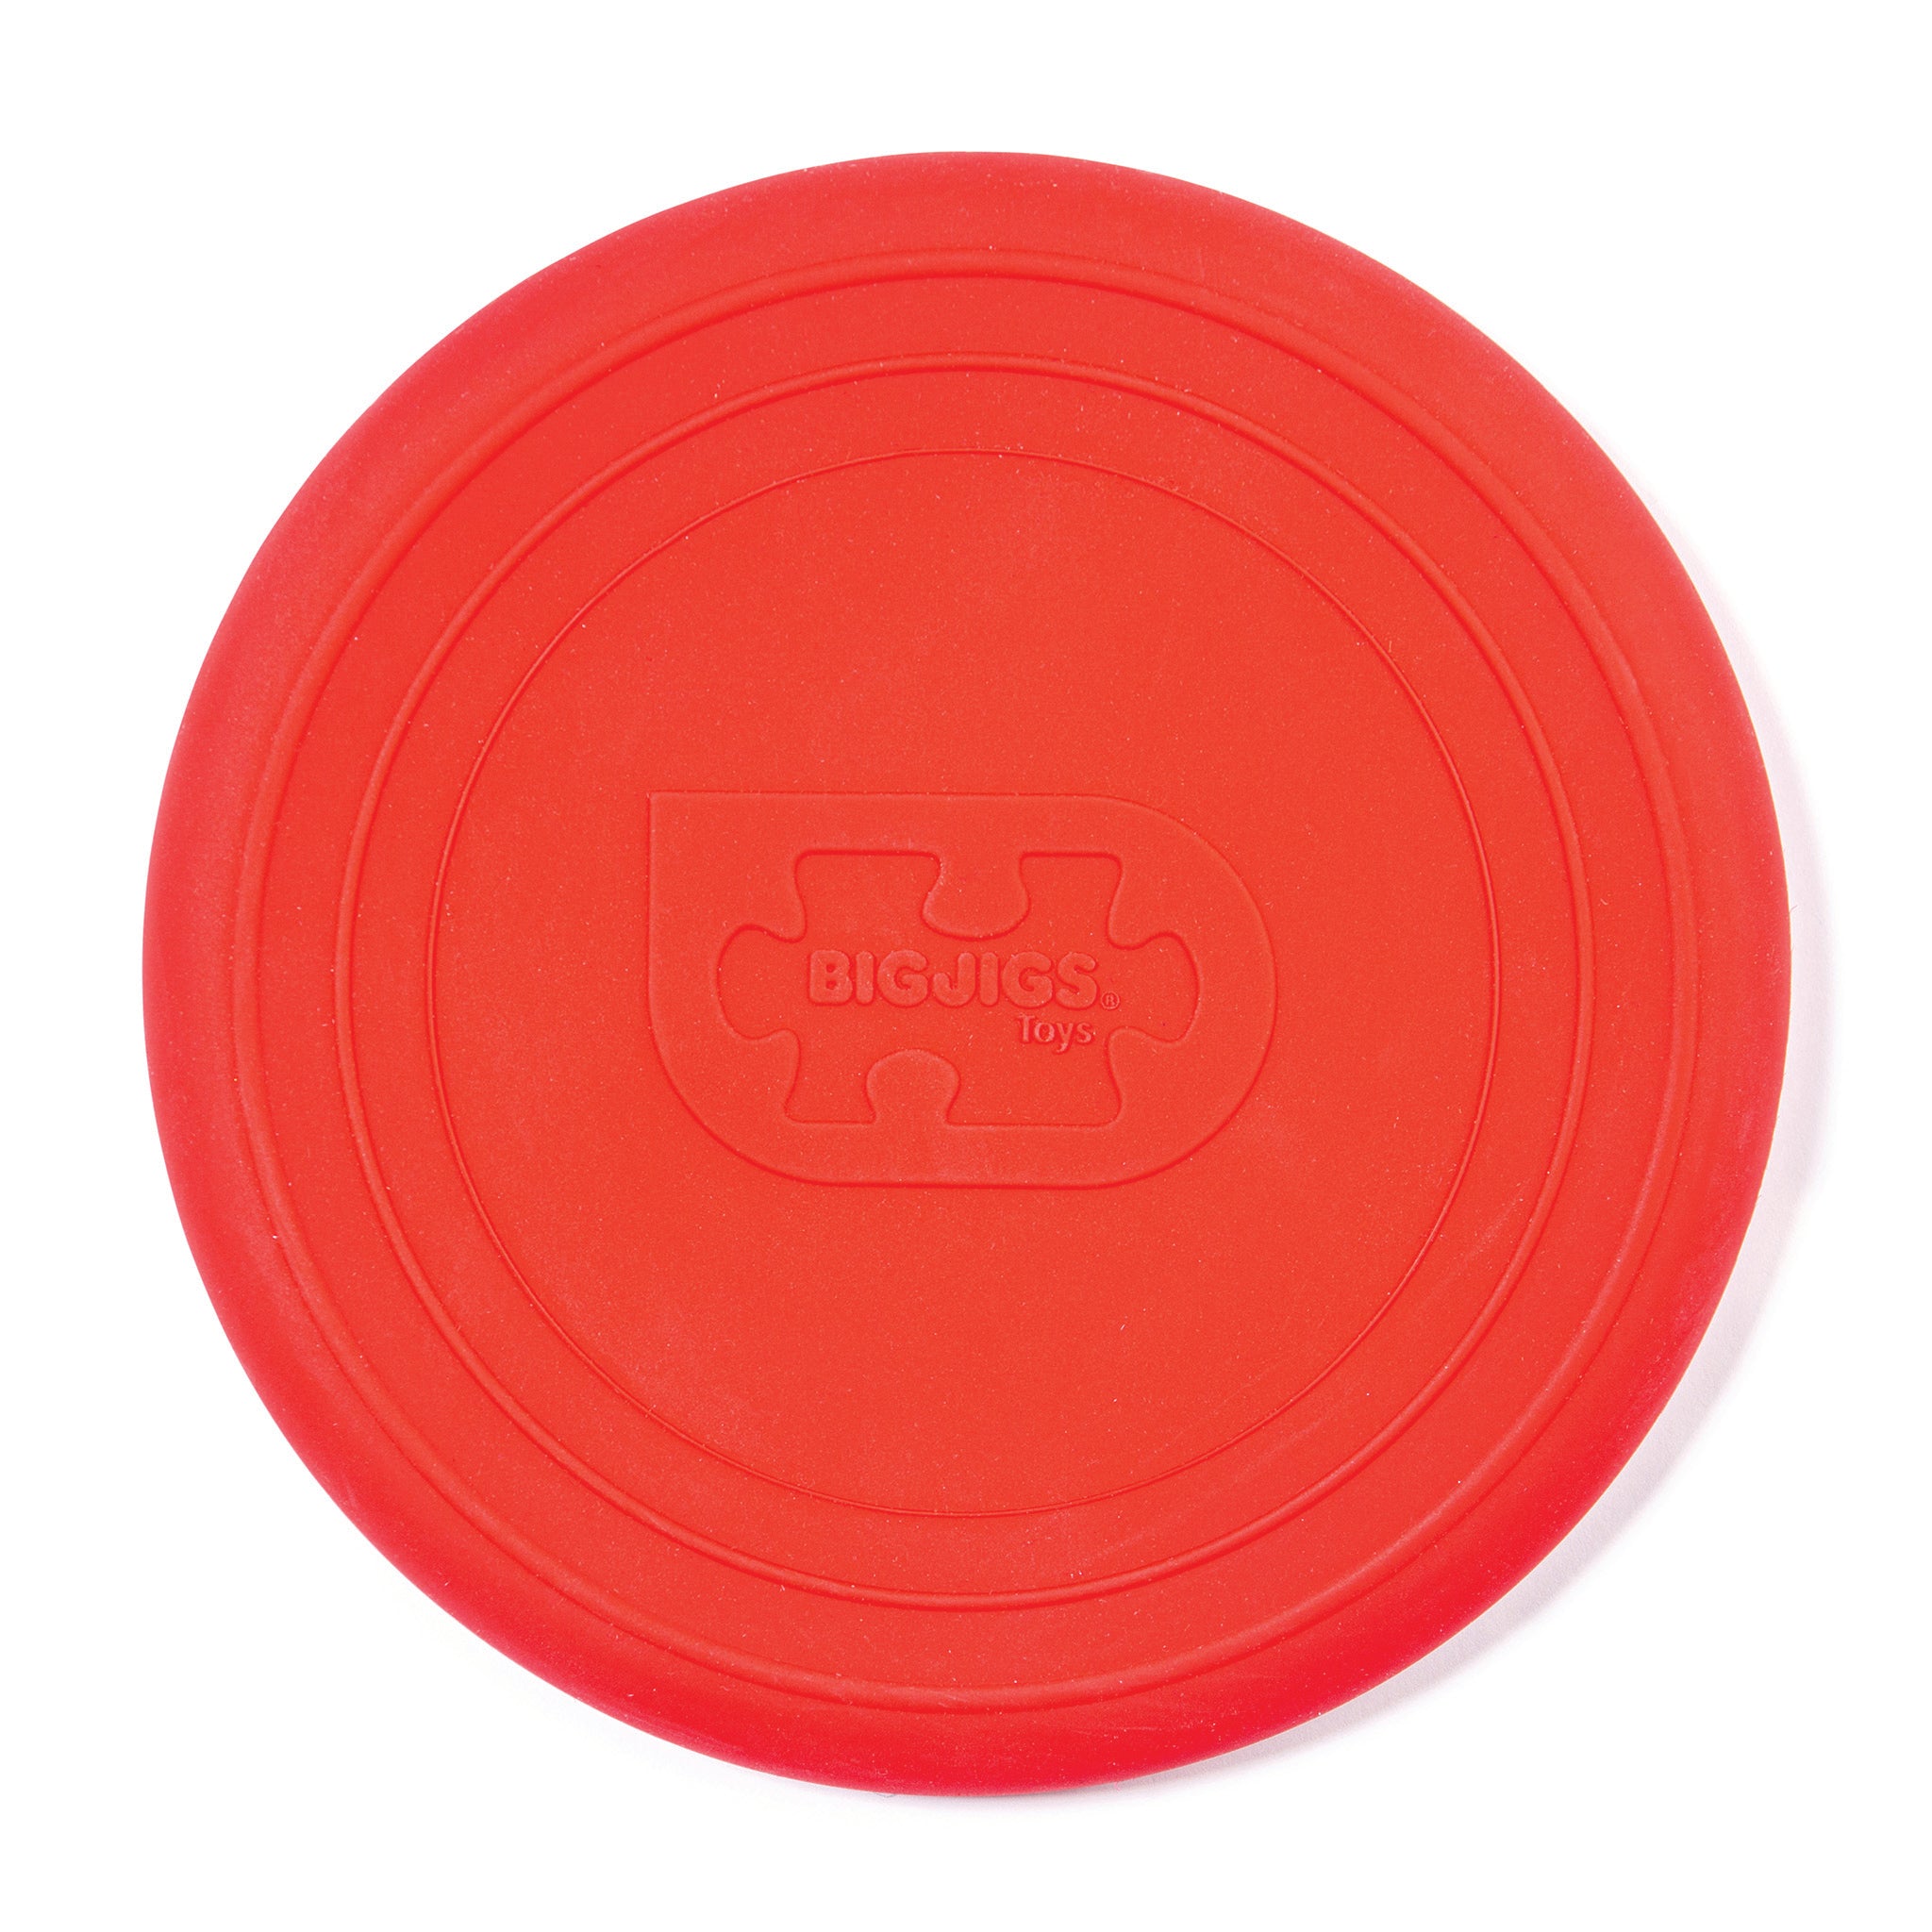 Cherry Red Plastic Free Frisbee